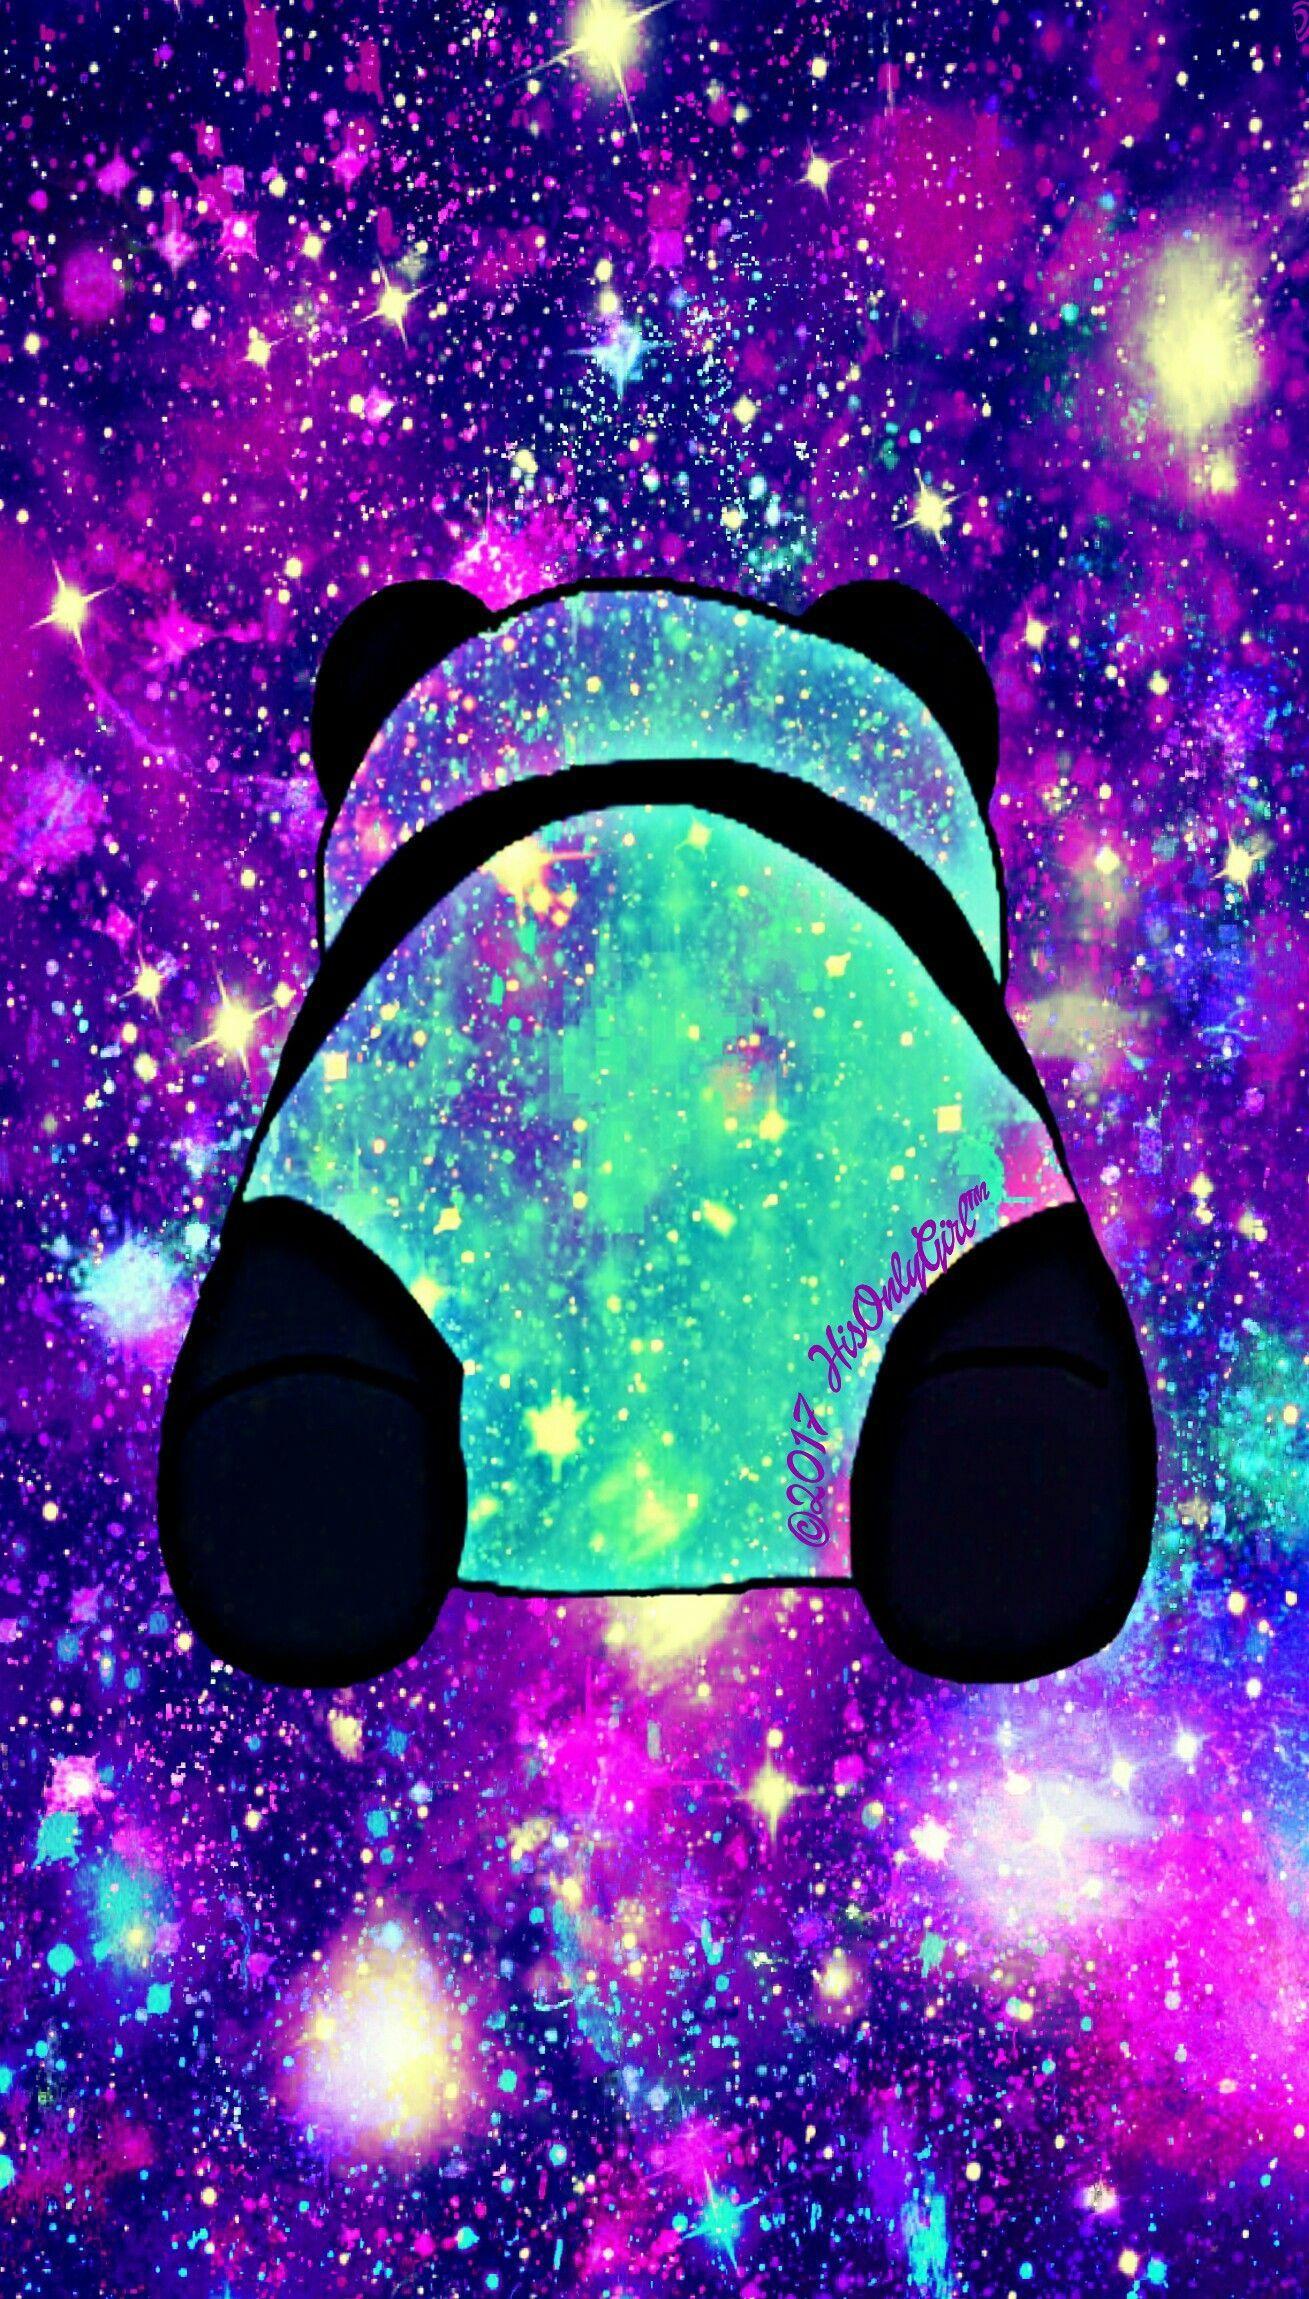 Purple panda cheeks galaxy wallpaper I created for the app CocoPPa